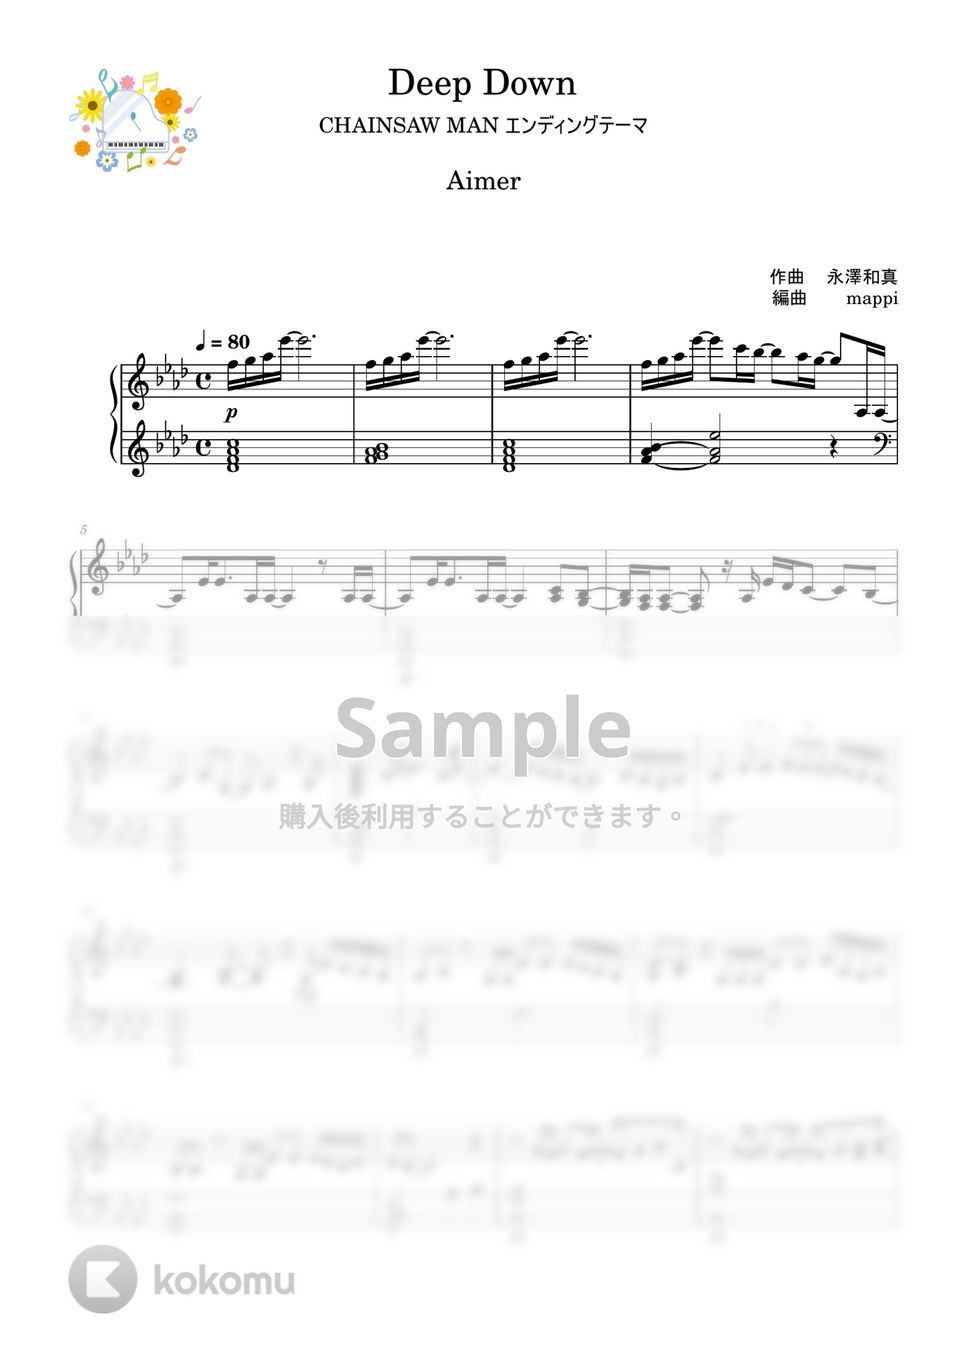 Aimer - Deep down (私にも弾ける/チェンソーマン/シンプルアレンジ) by pup-mappi